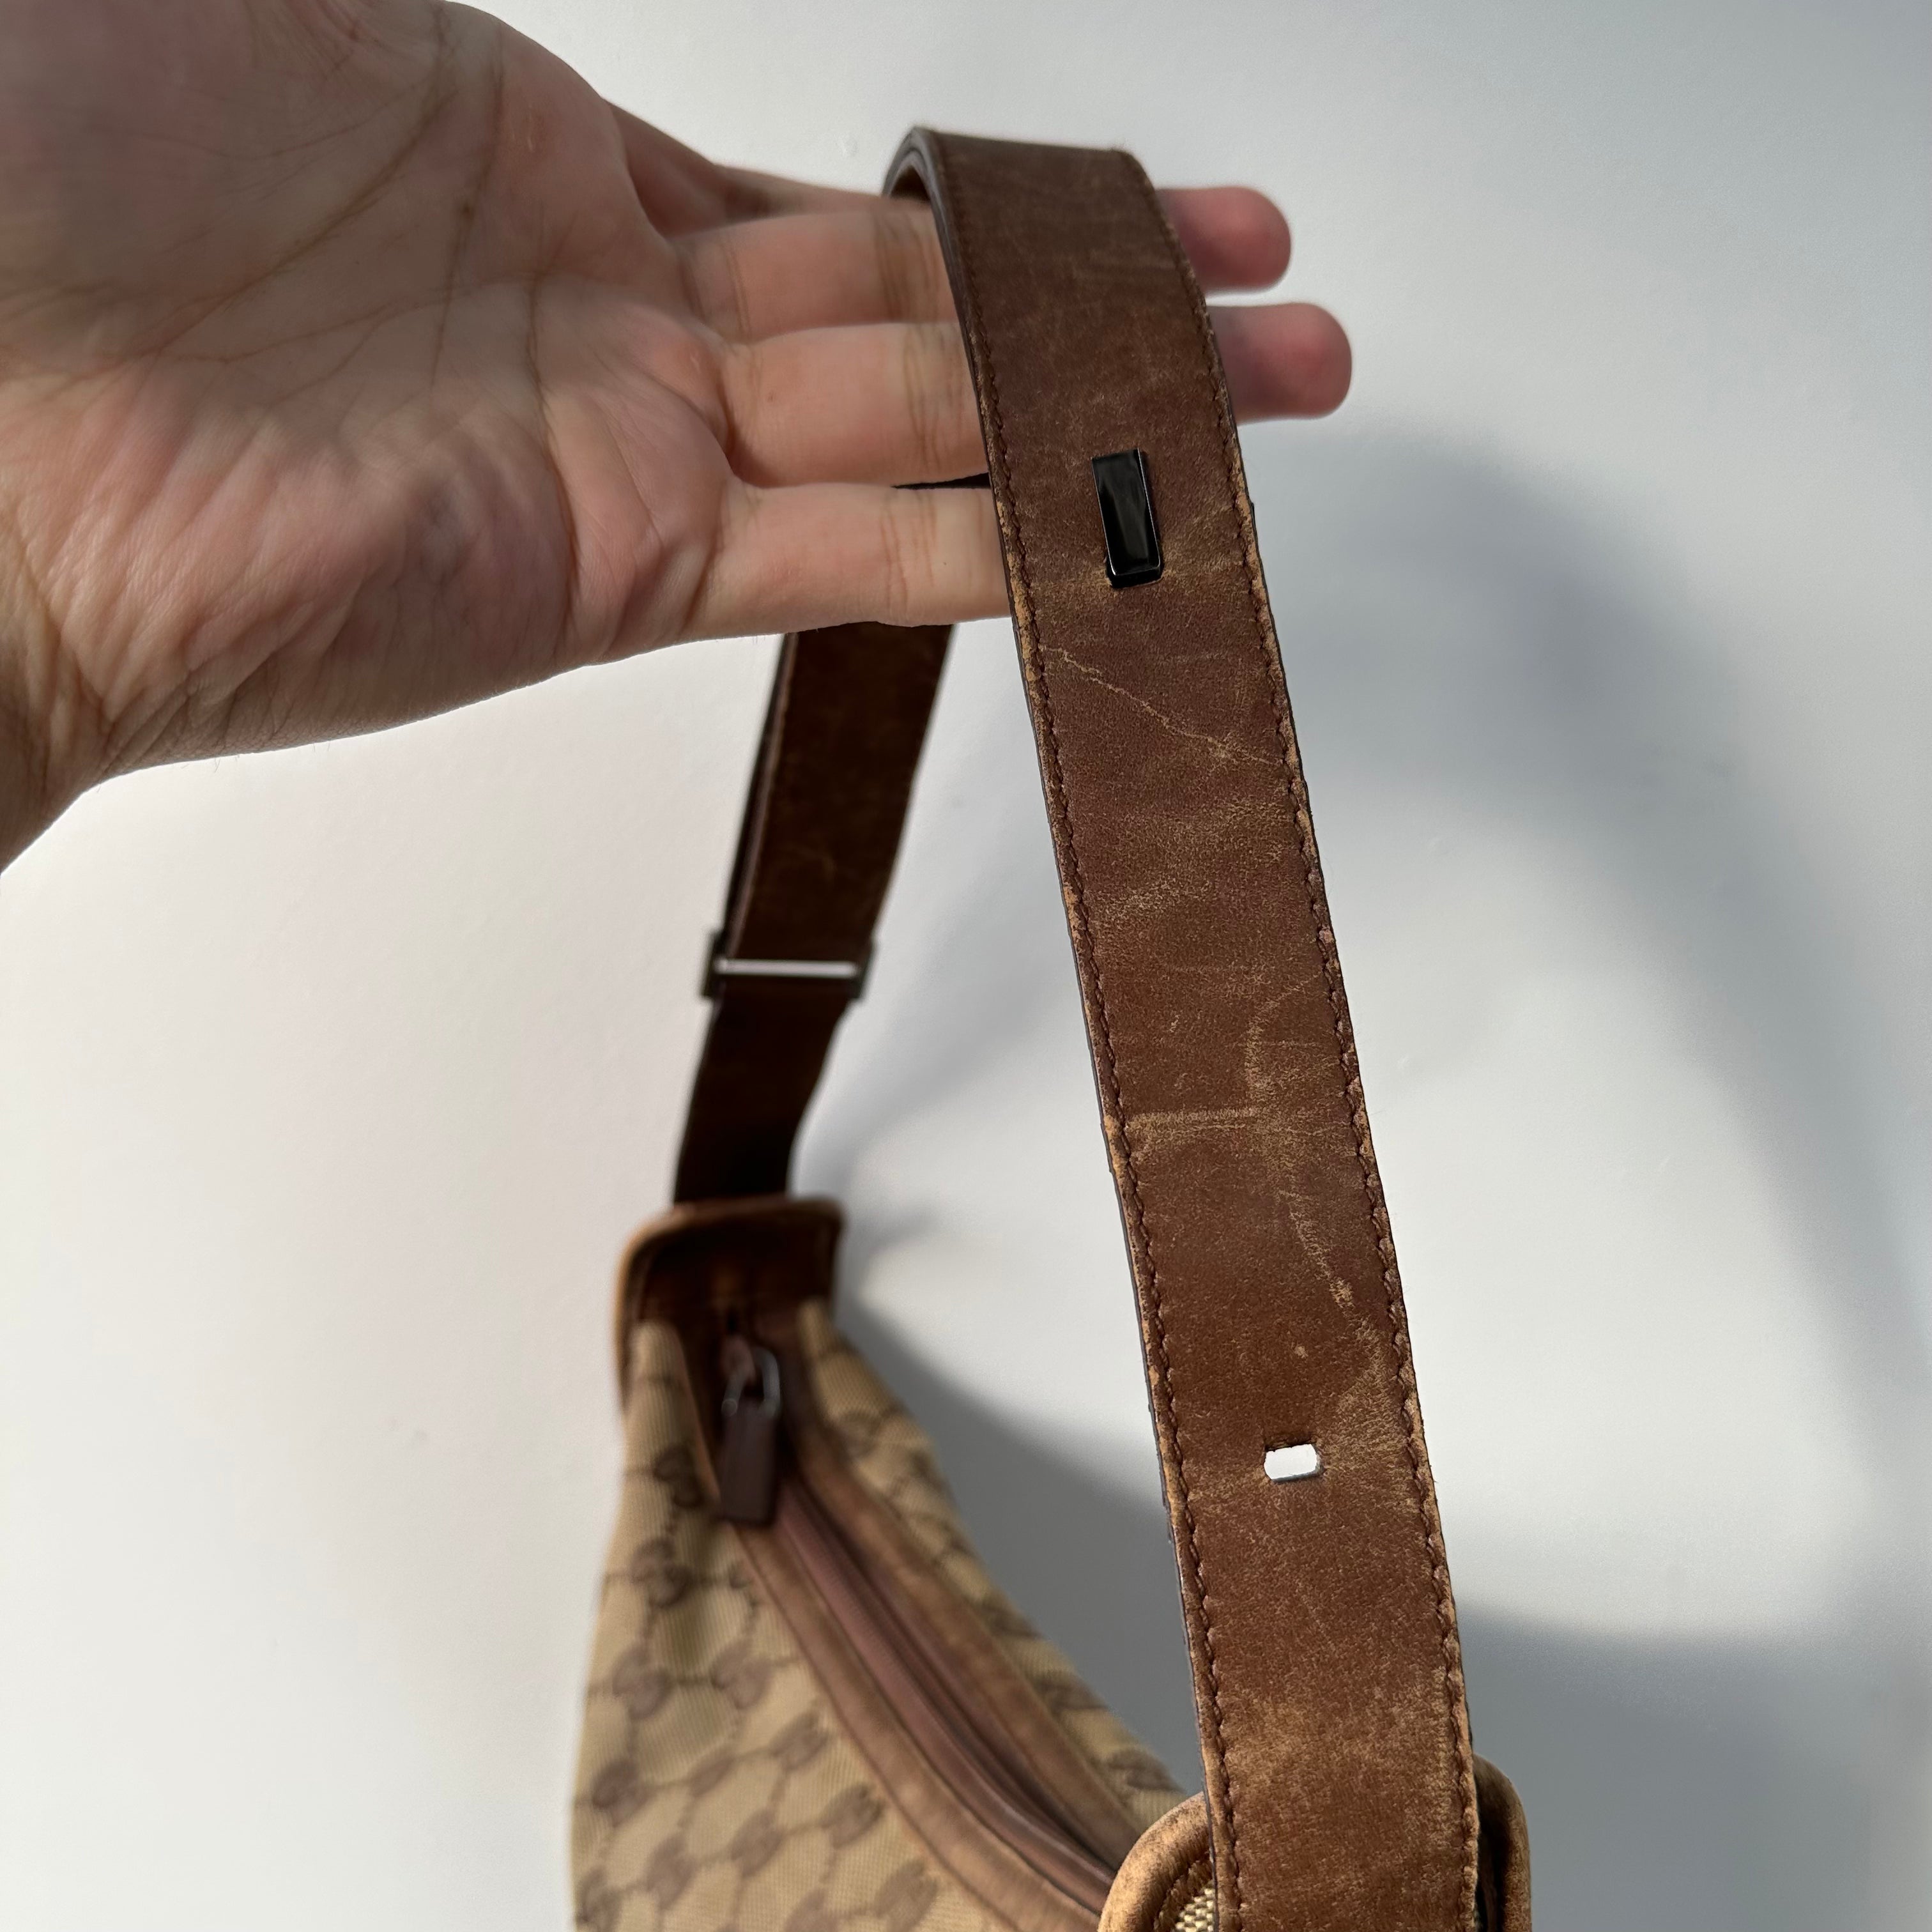 Gucci Square Shoulder Bag with Leather Corner